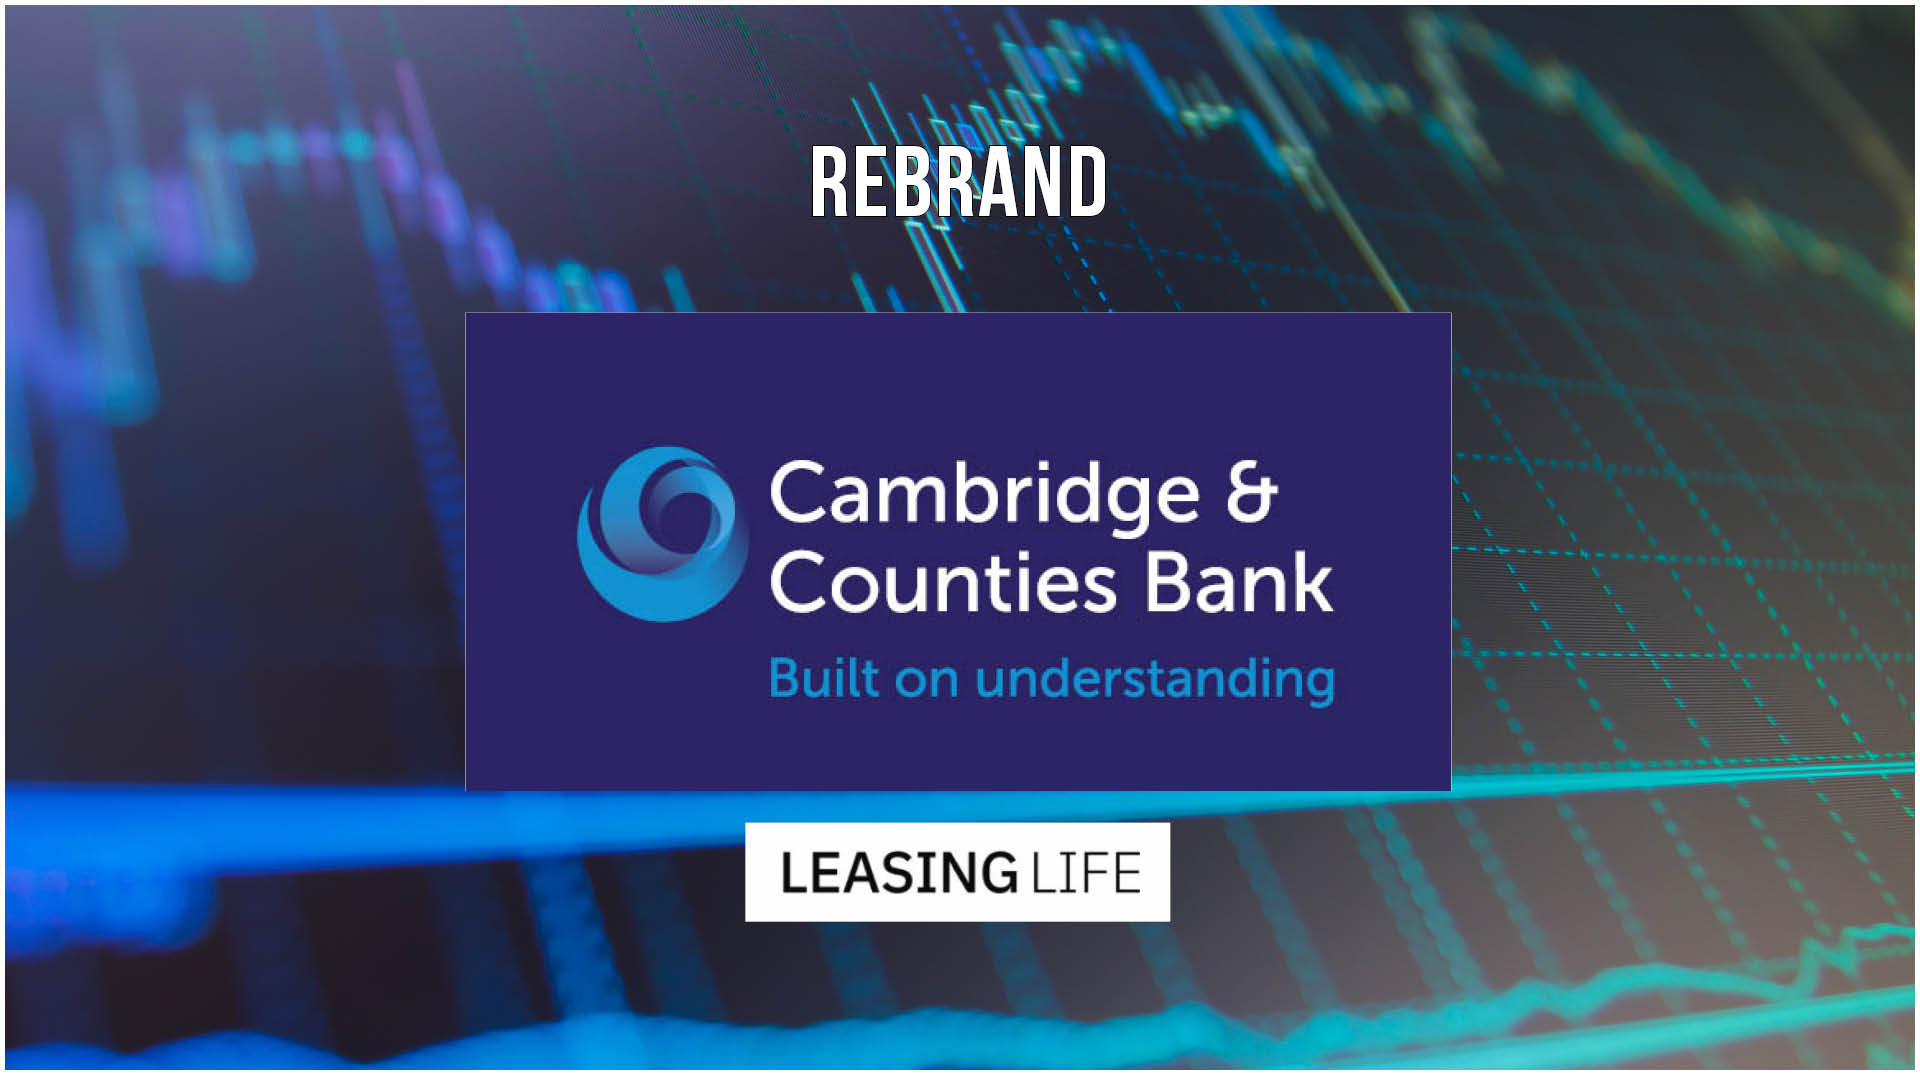 Cambridge & Counties Bank completes significant rebranding initiative